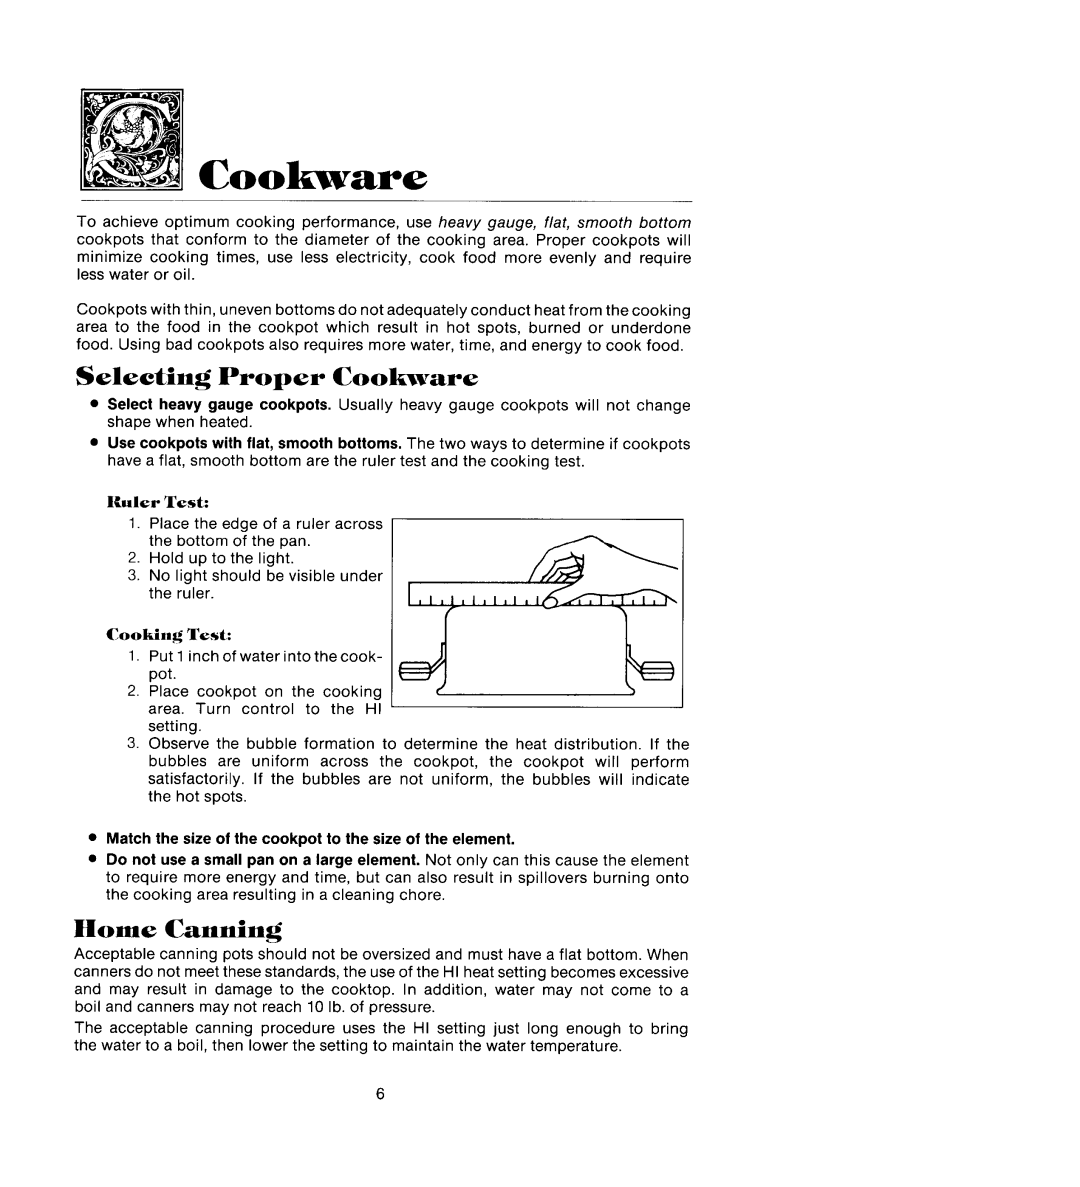 Jenn-Air CCR466B manual Selecting Proper Cookware, Home Canning, Ruler Test 